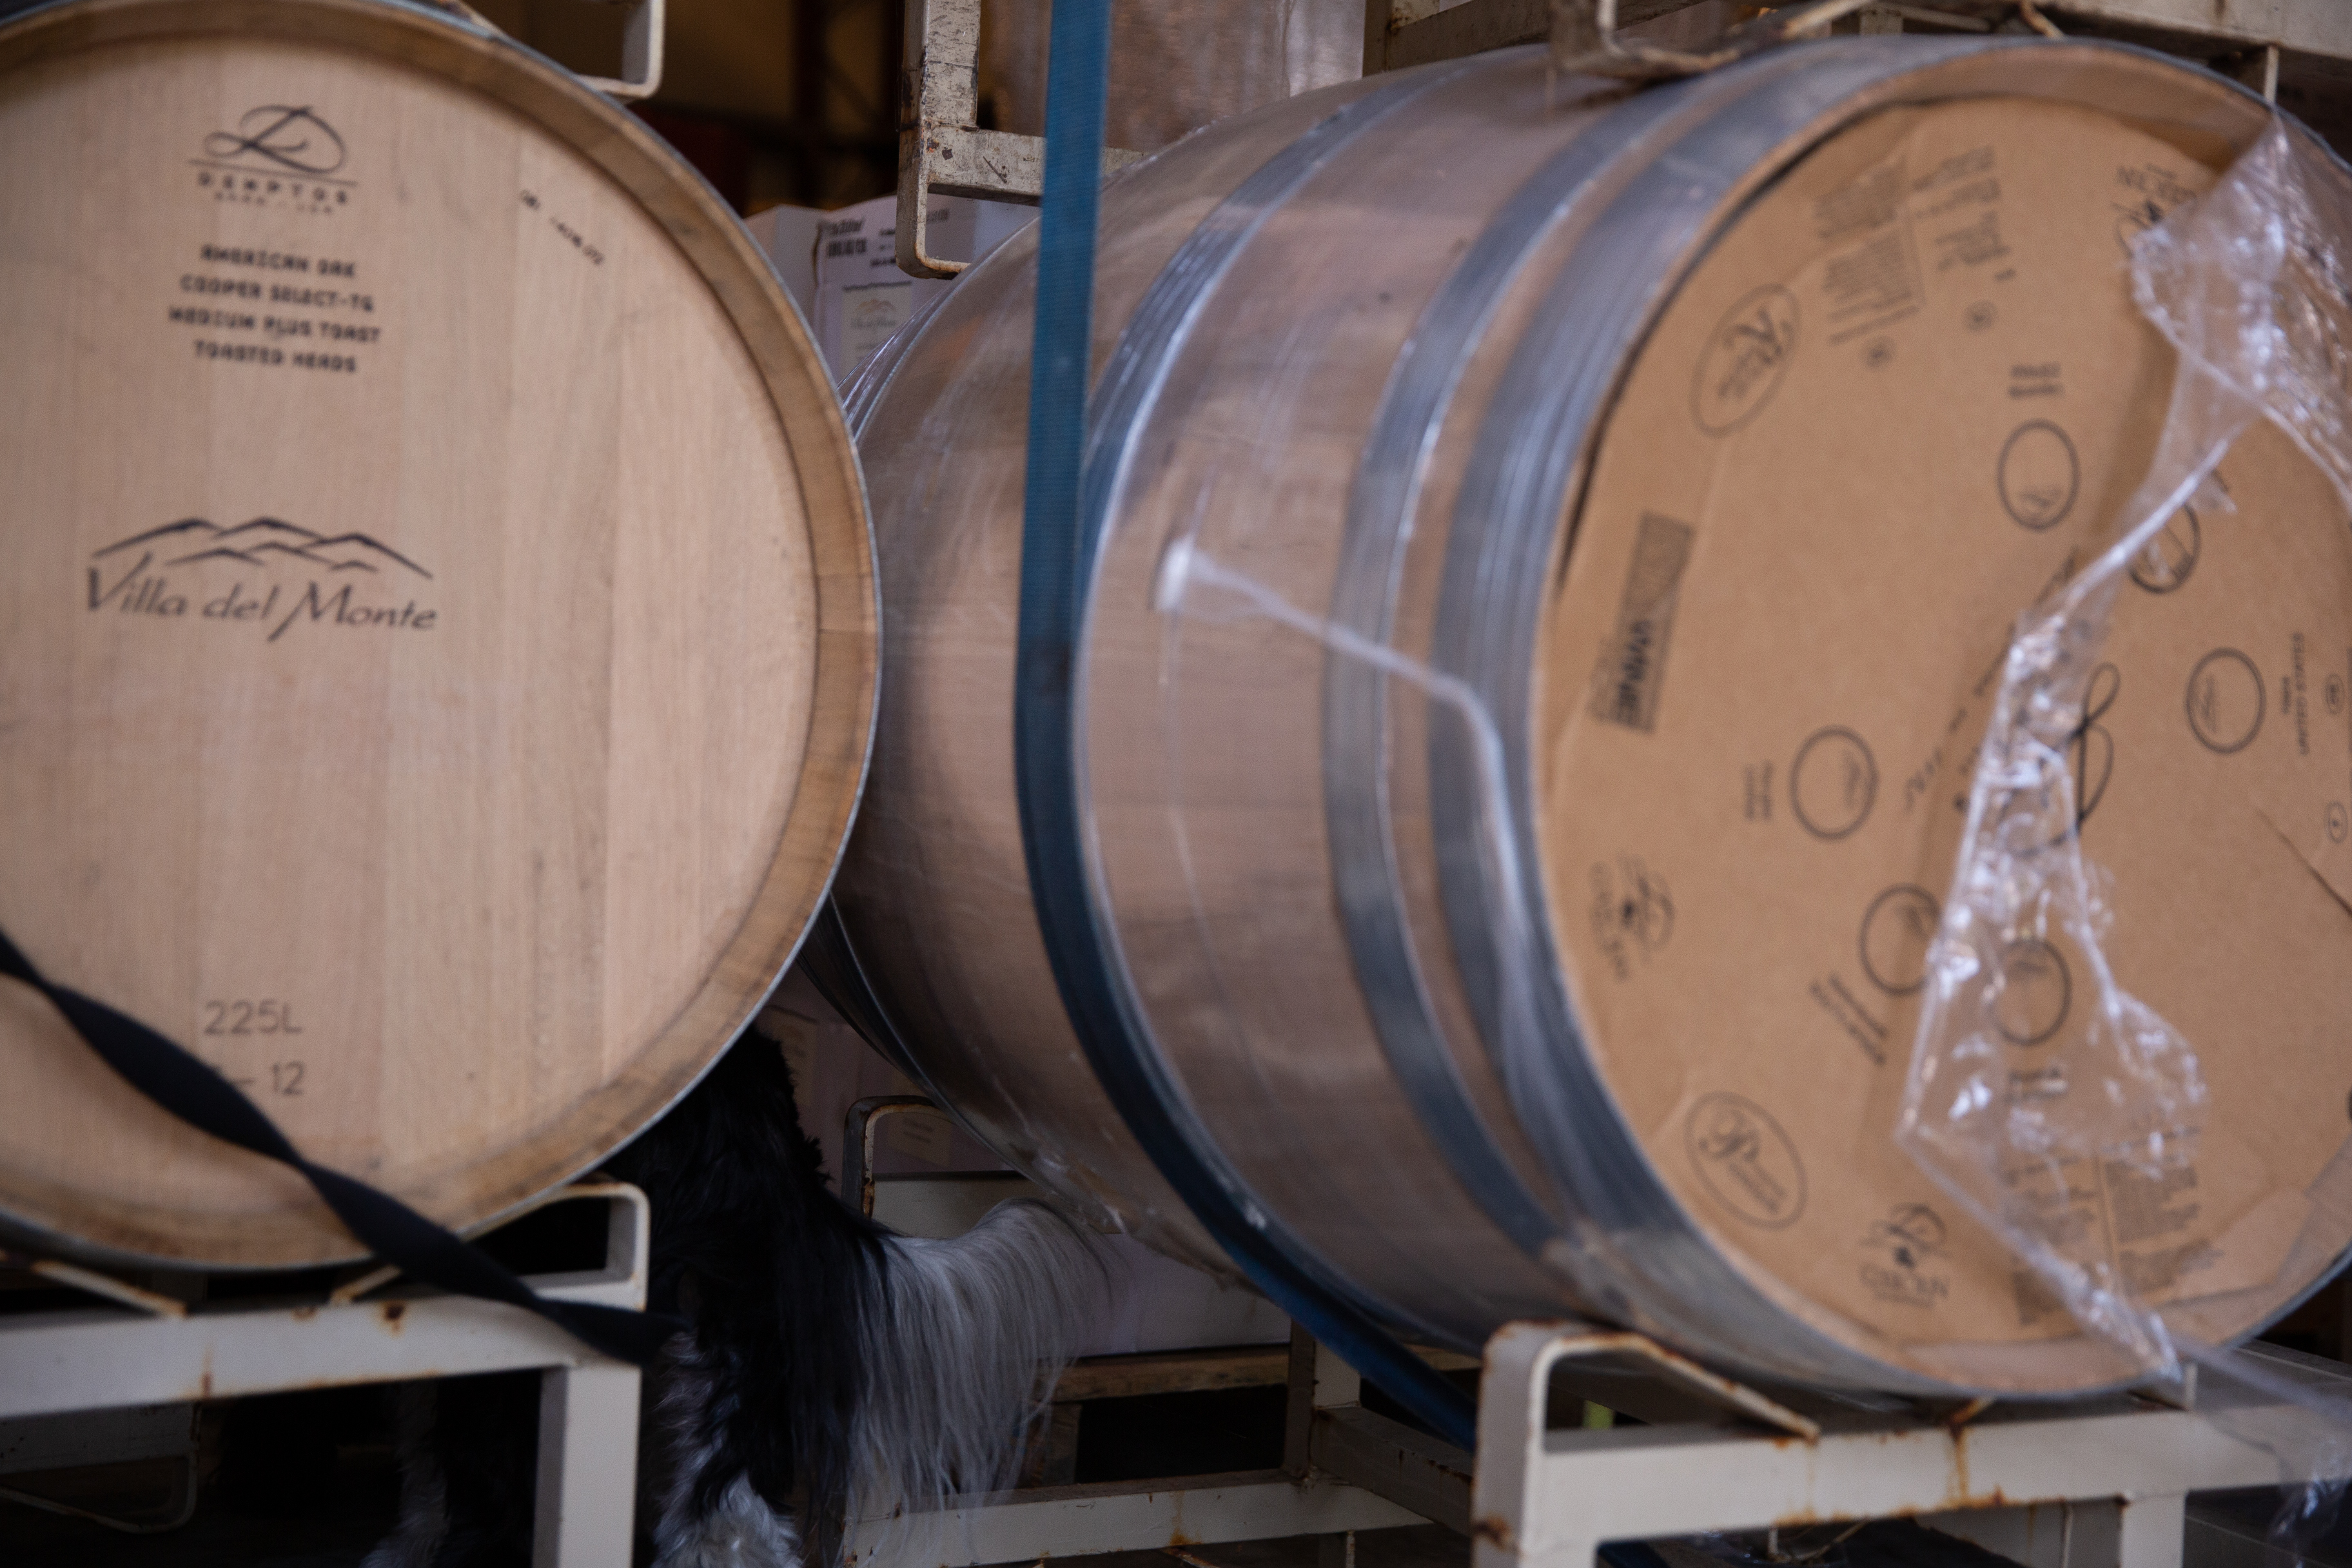 New wine barrels at Villa del Monte Winery